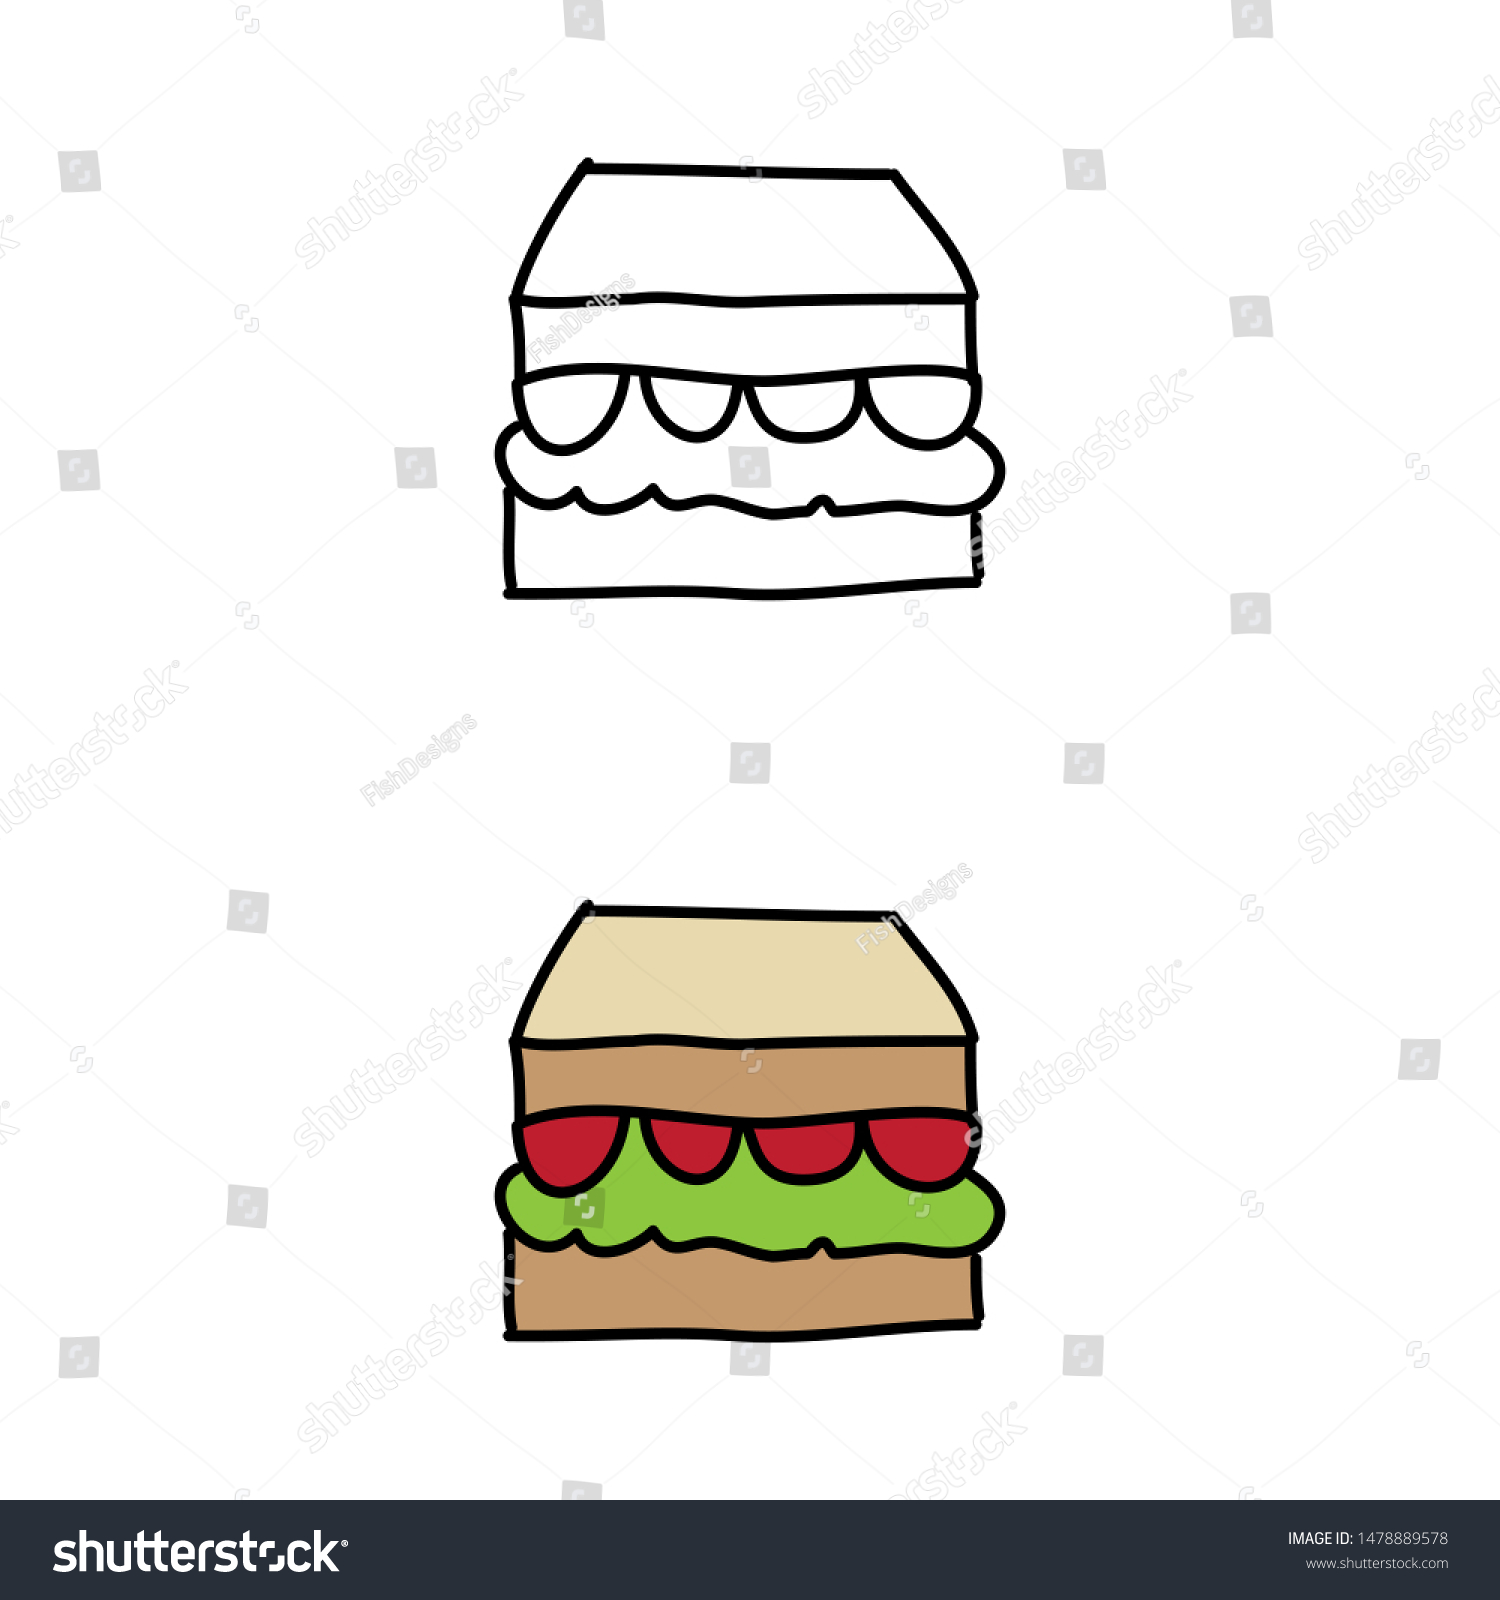 how to draw a sandwich